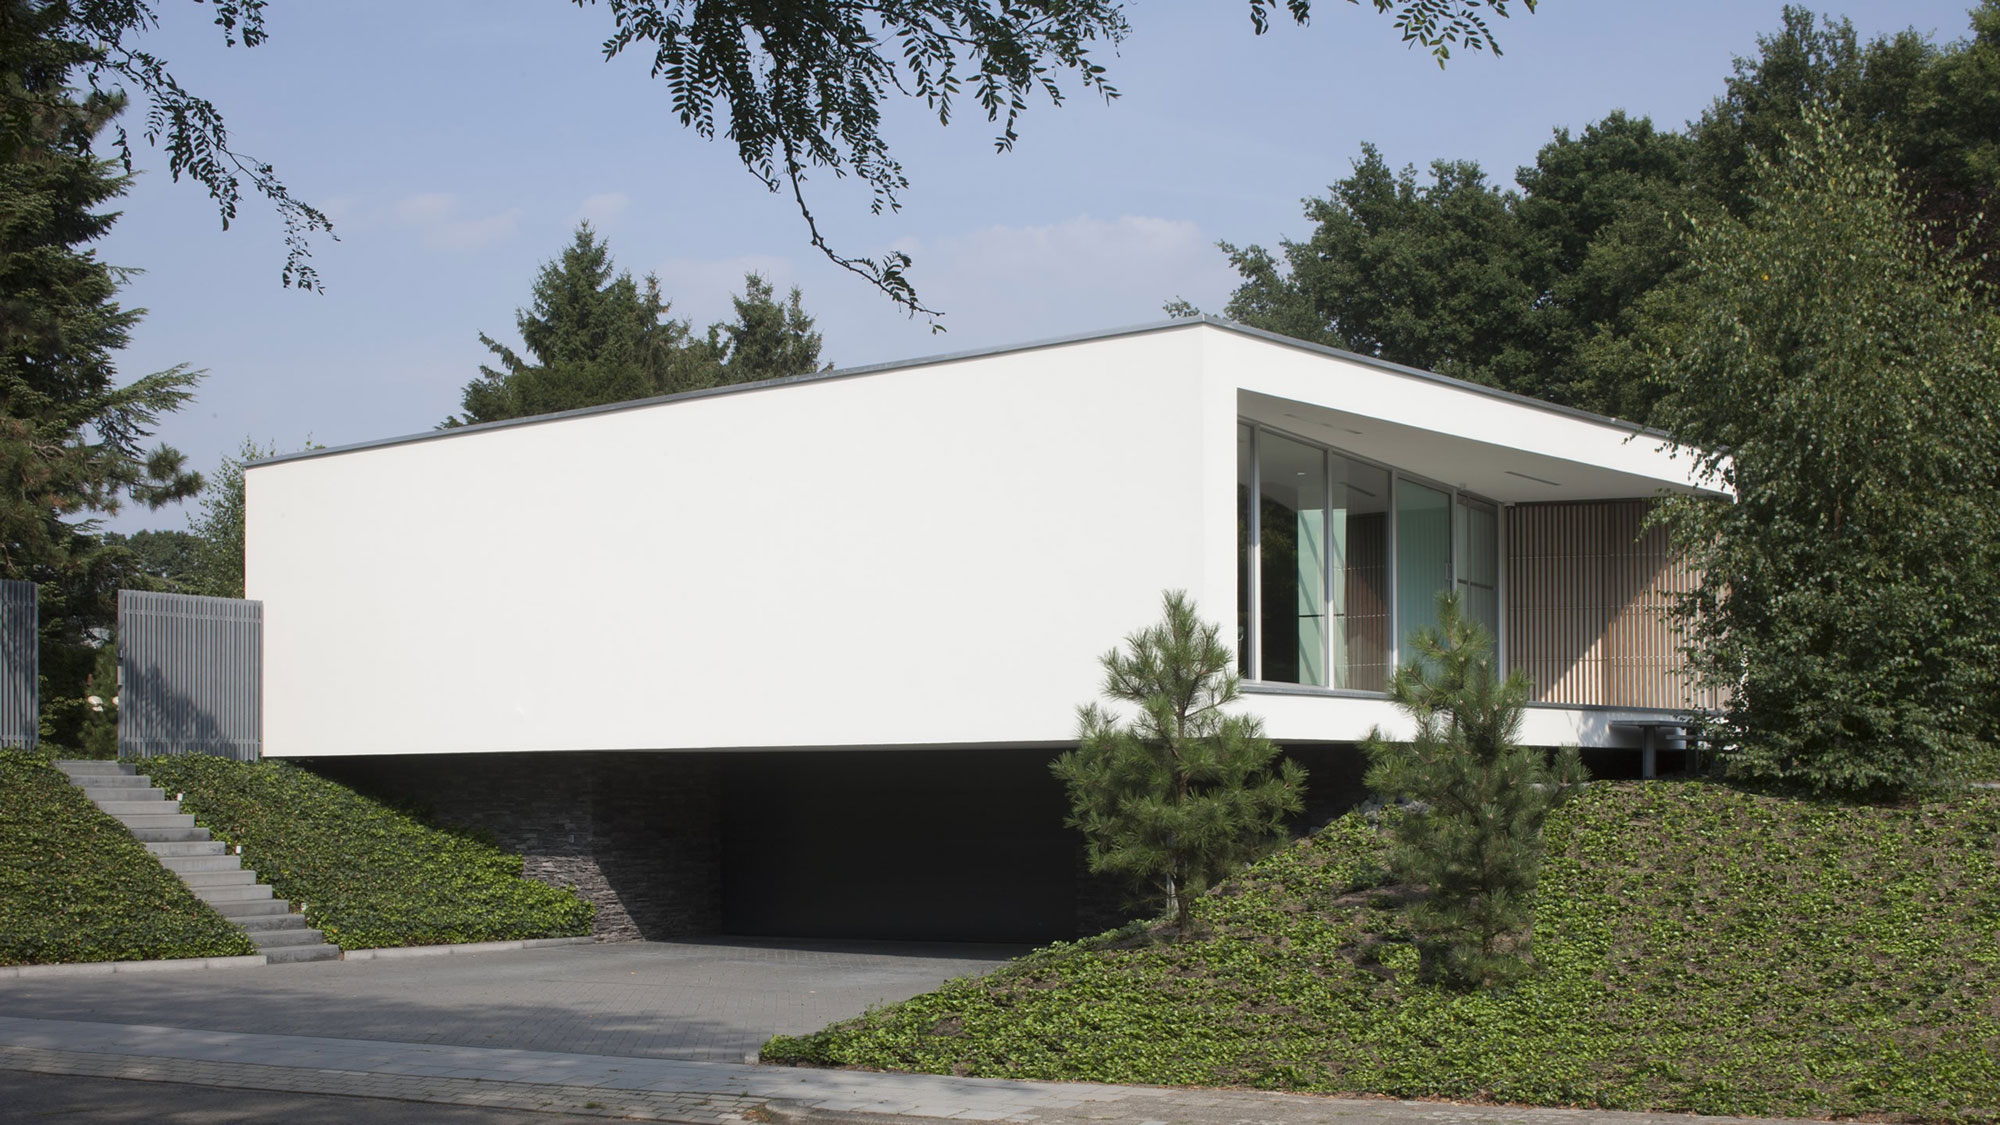 Boxed Villa Spee Haelen with Panoramic Windows by Lab32 architecten-02